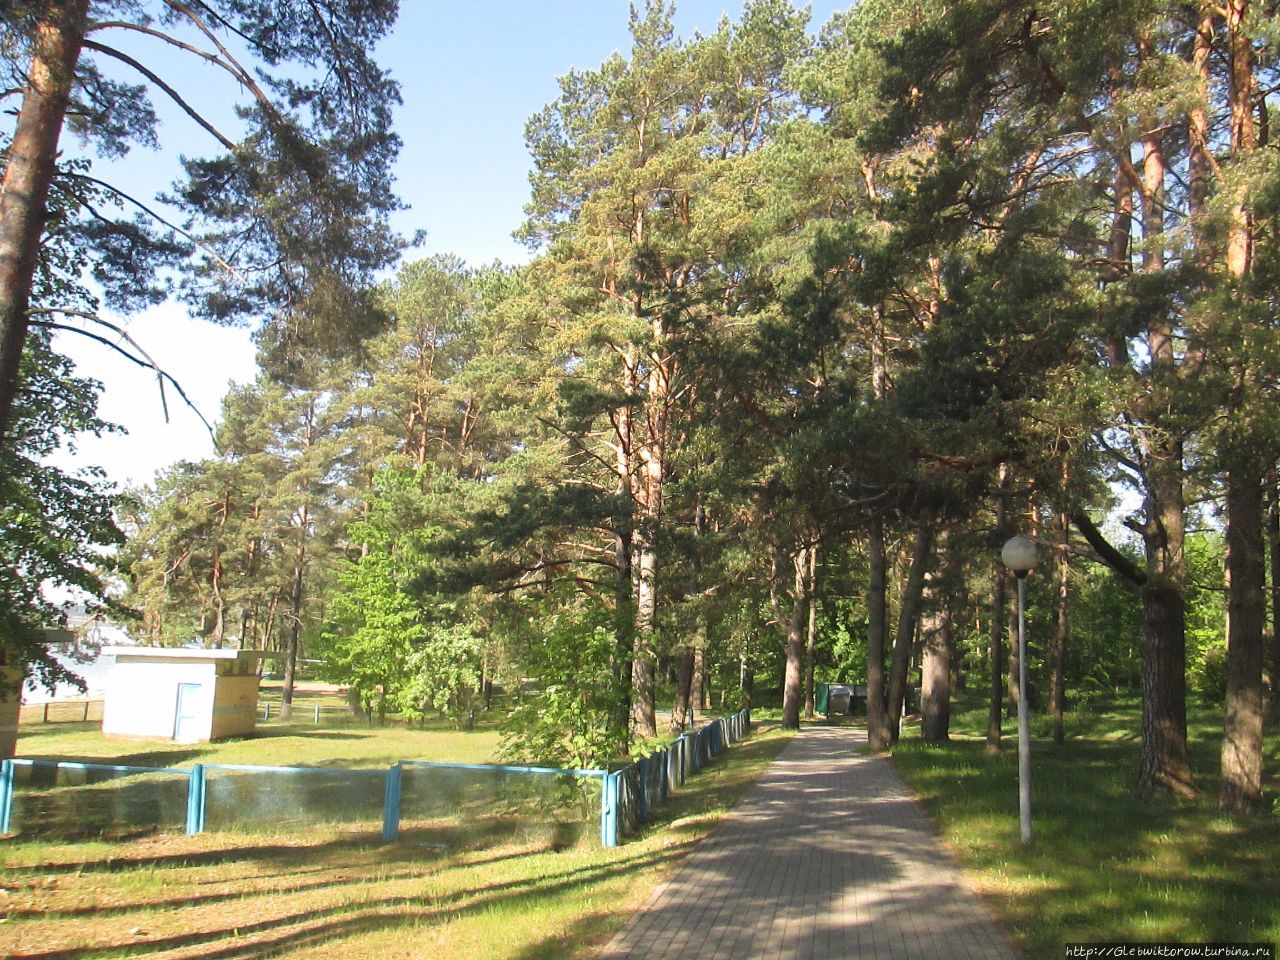 Прогулка по санаторному парку Нарочь, Беларусь